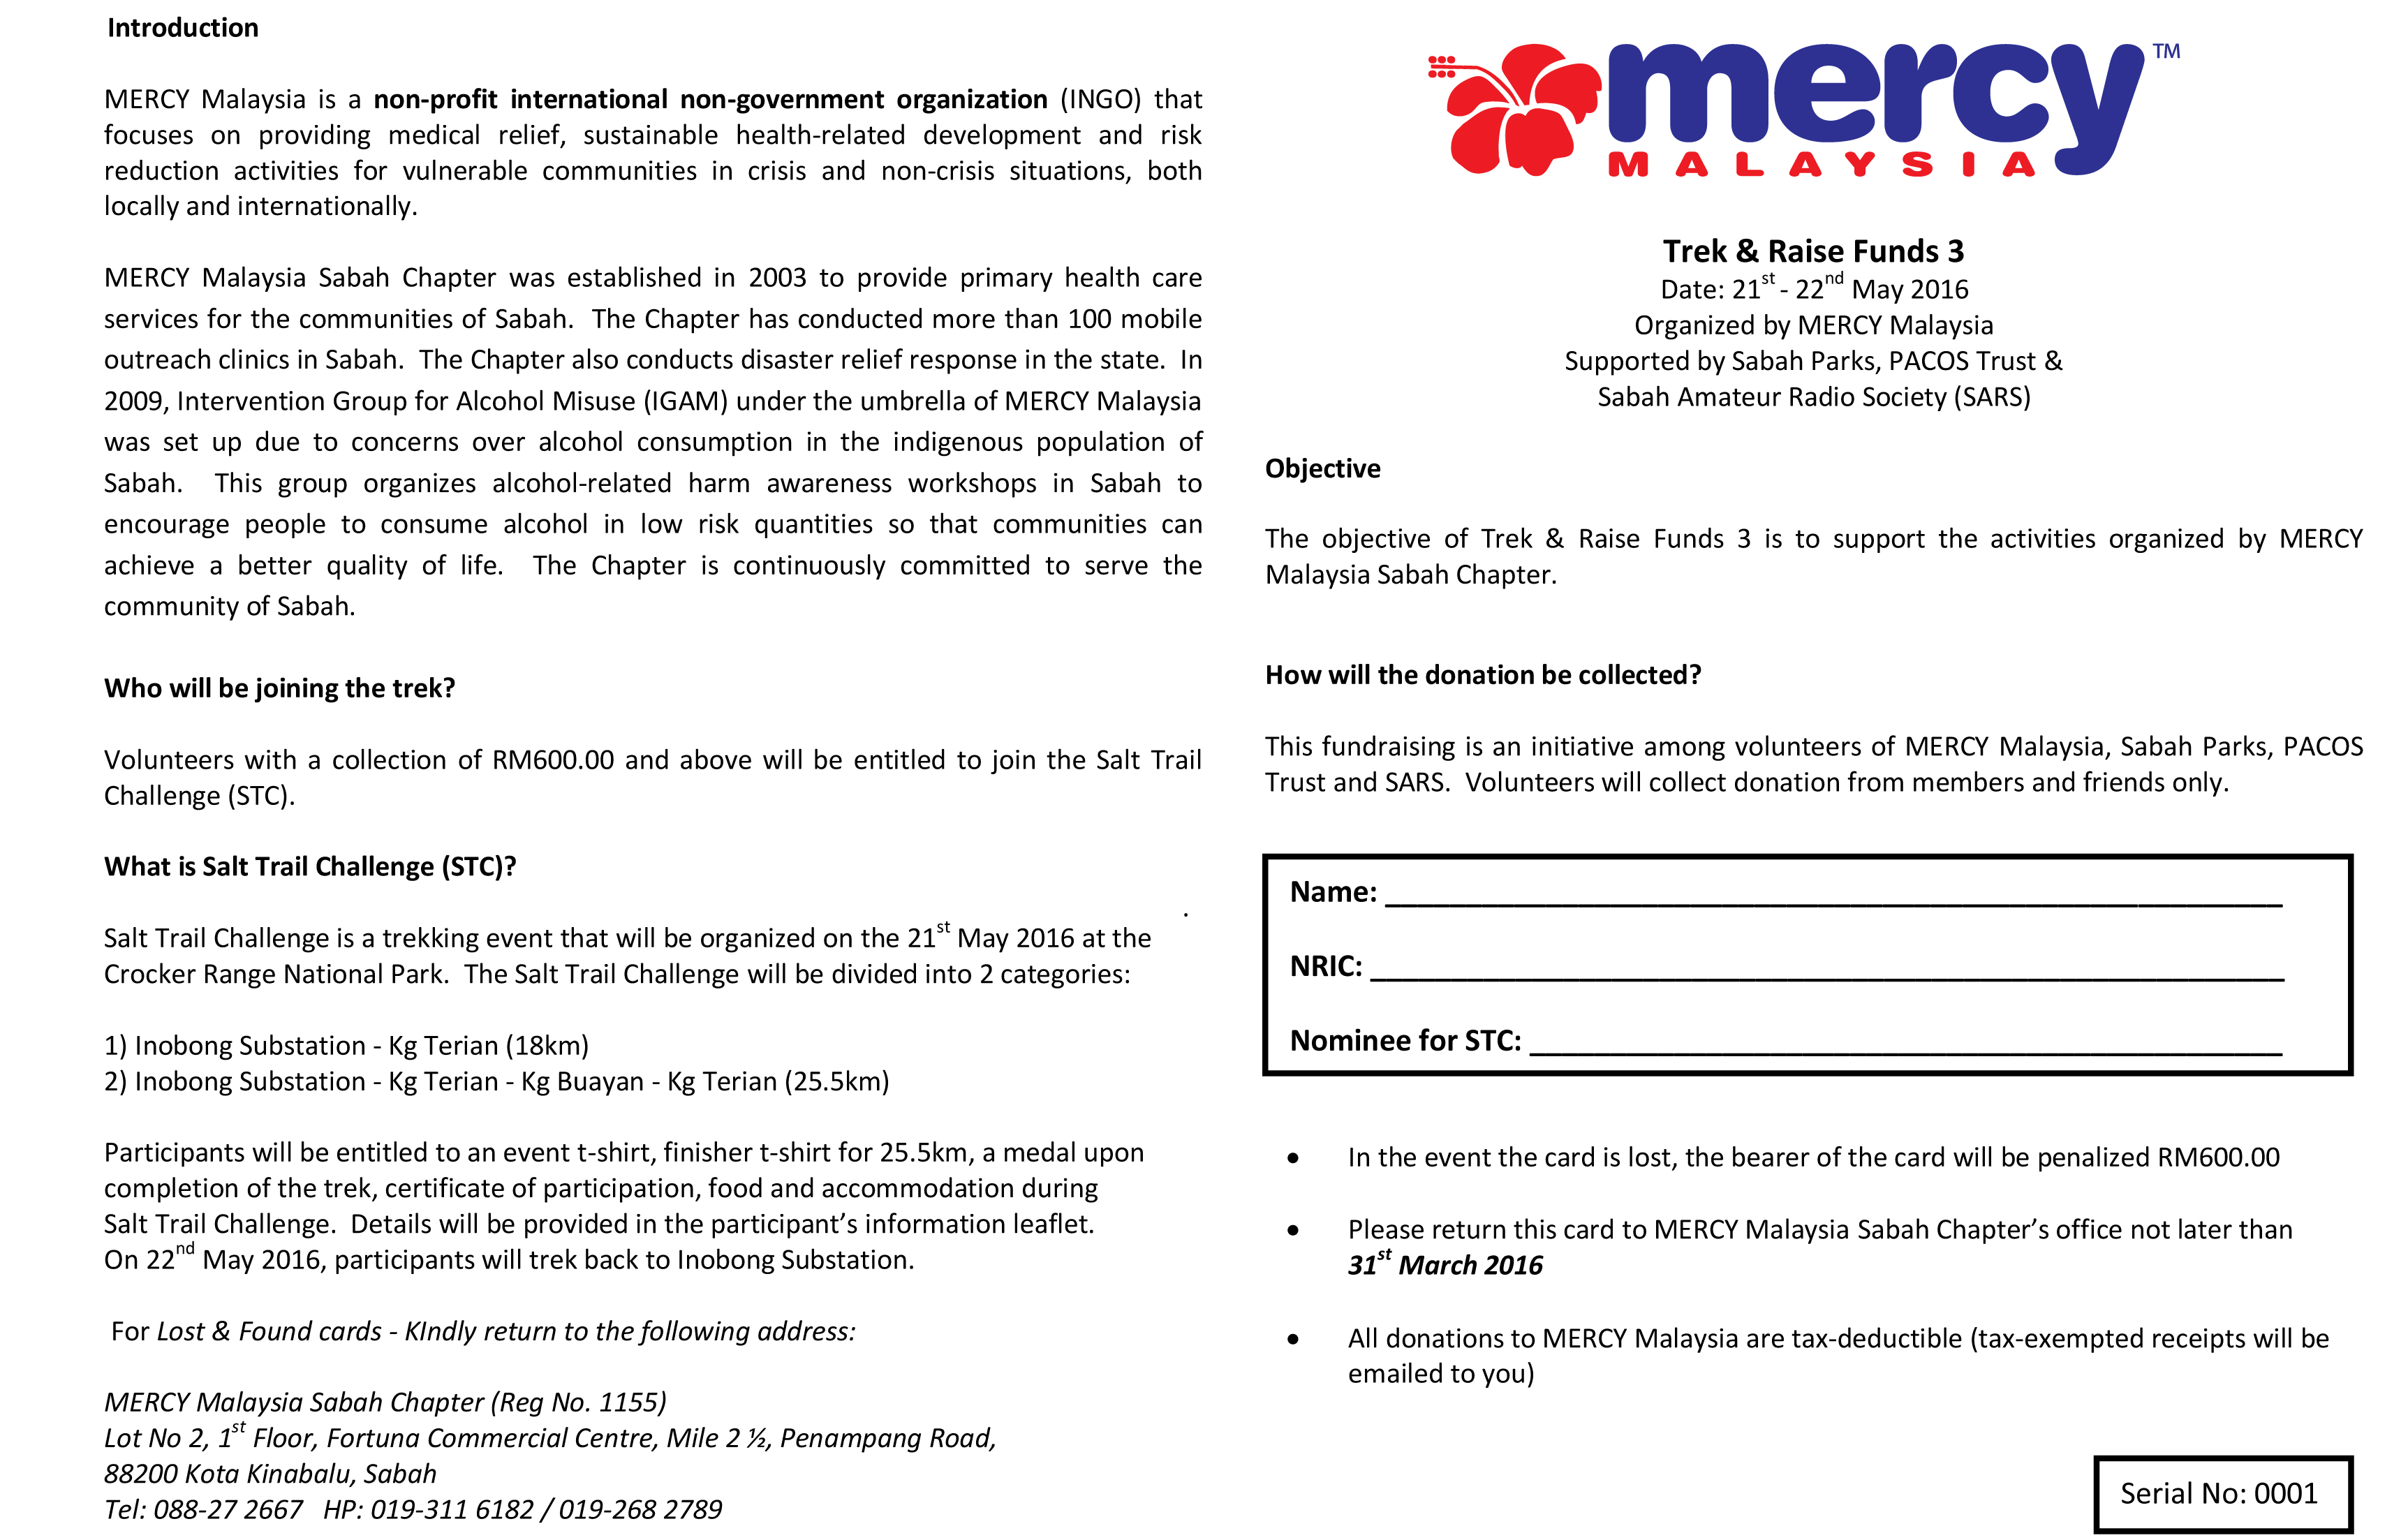 donation-card-stc2016-1-mercy-malaysia